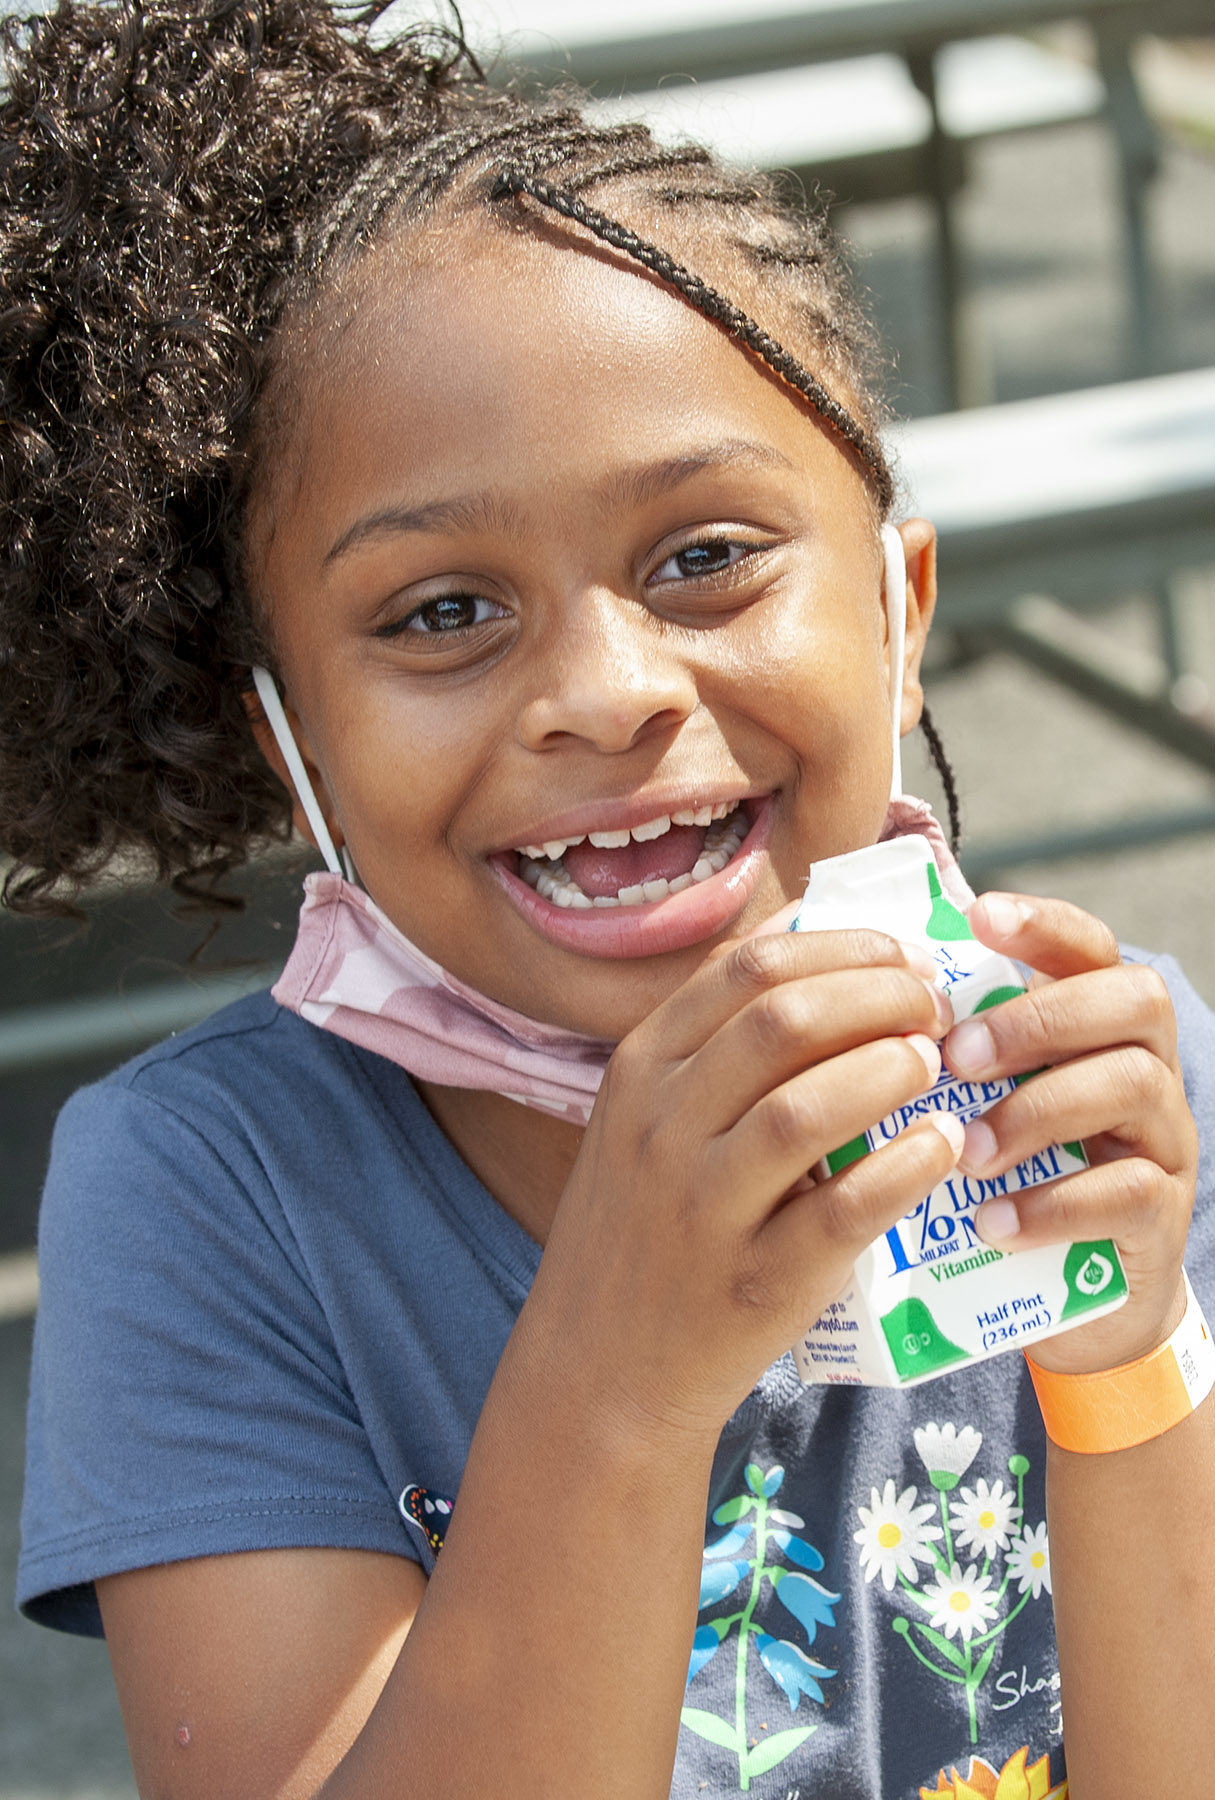 New York City Kids Enjoy Fresh, Cold Milk with Summer Meals